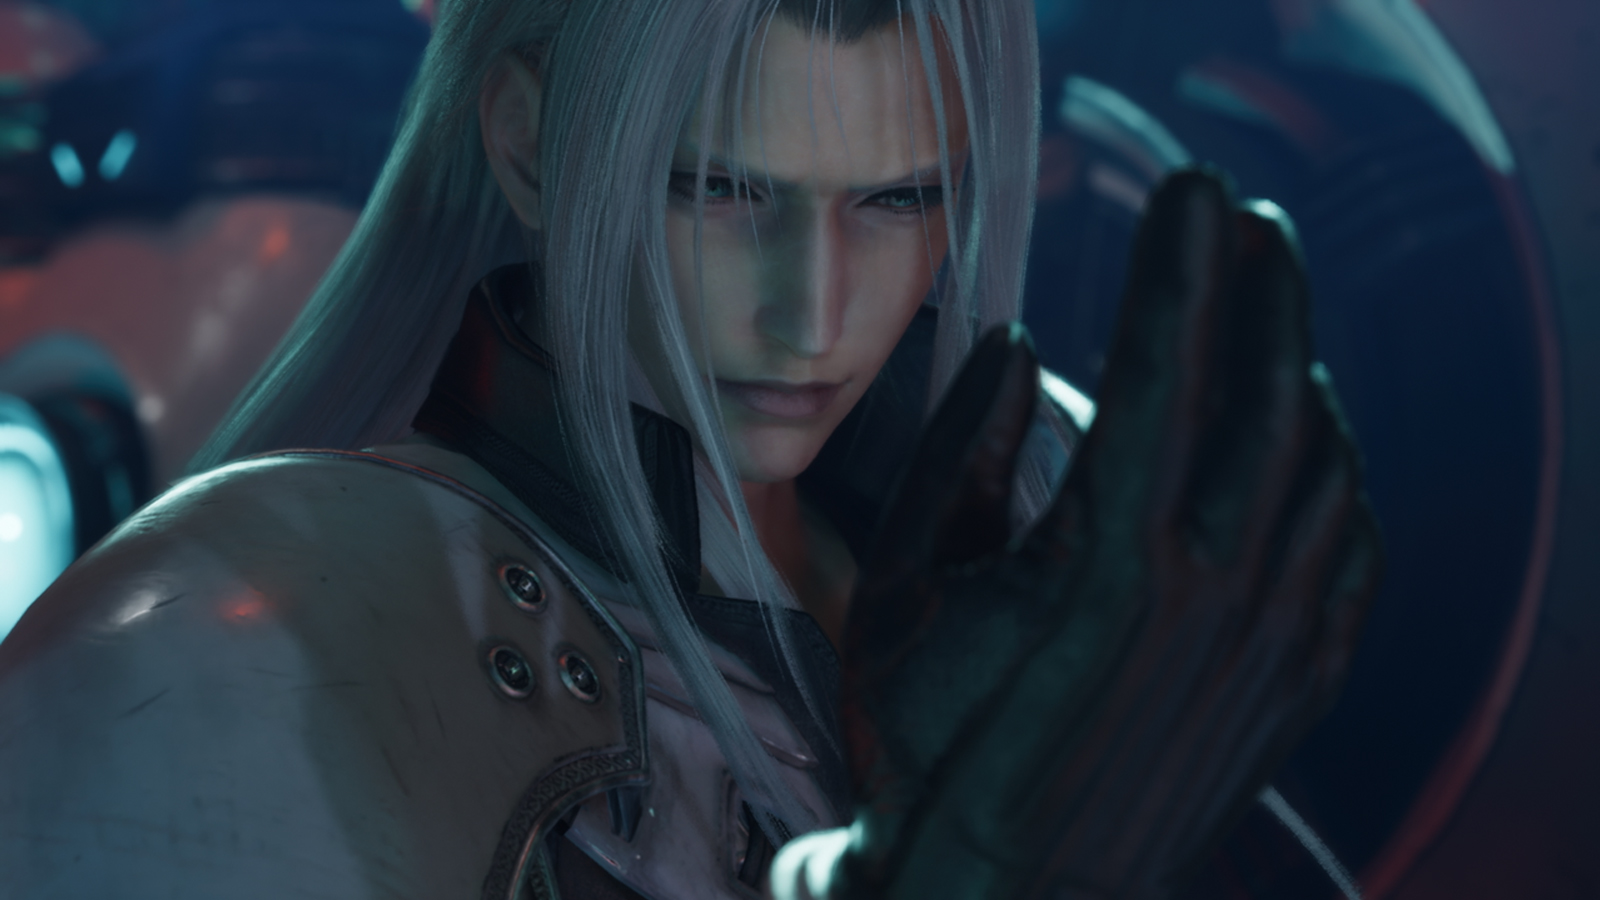 Final Fantasy 7 Rebirth Collector's Edition includes a Sephiroth